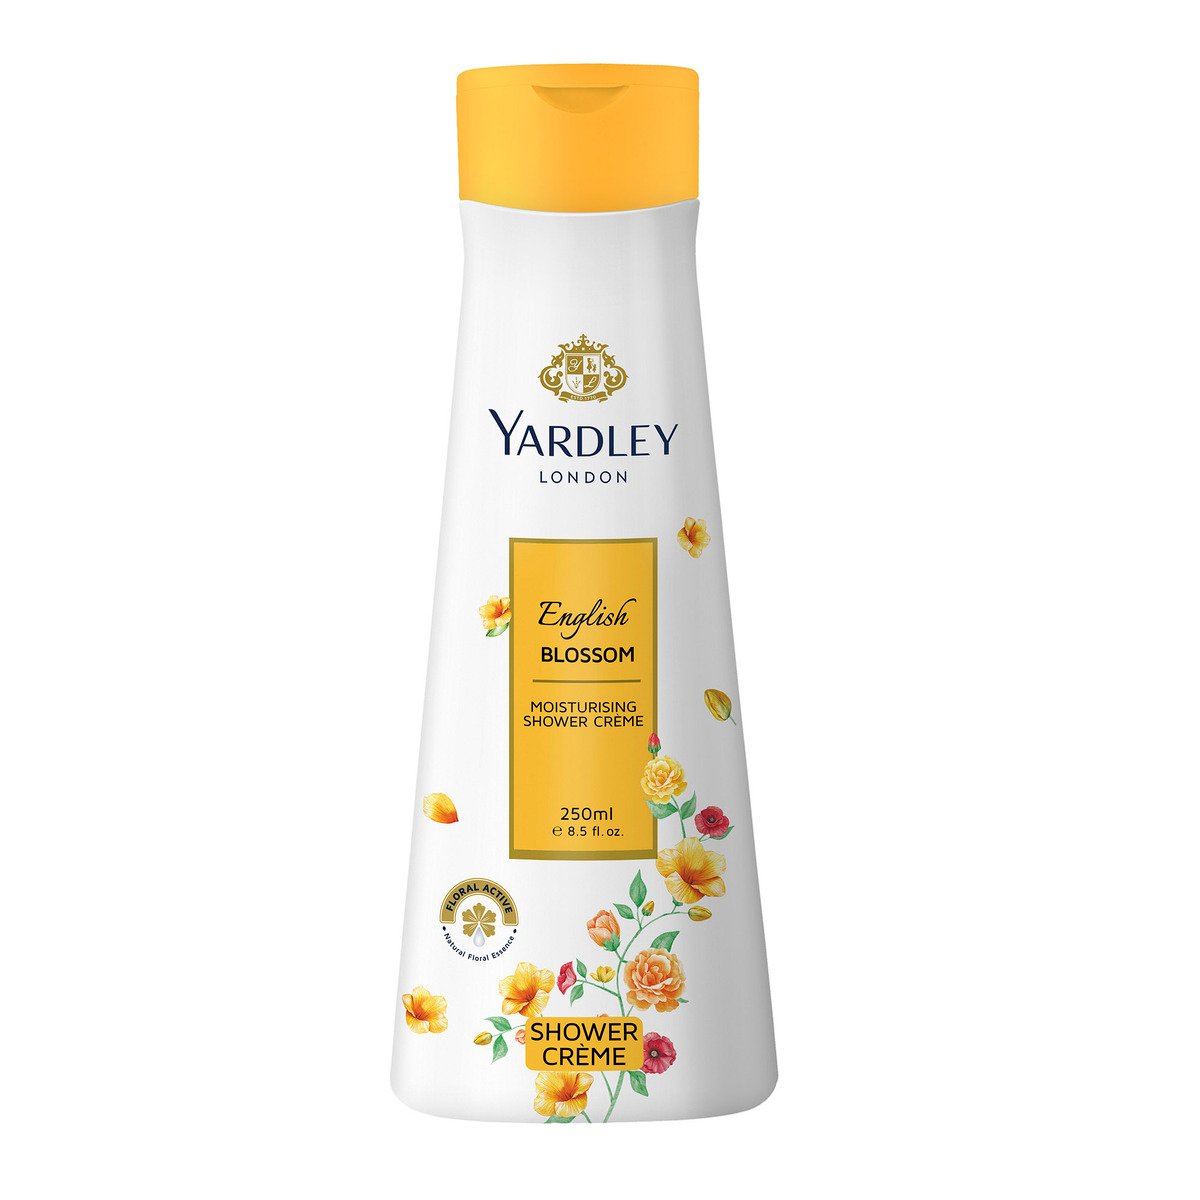 Yardley English Blossom Moisturising Shower Creme 250 ml